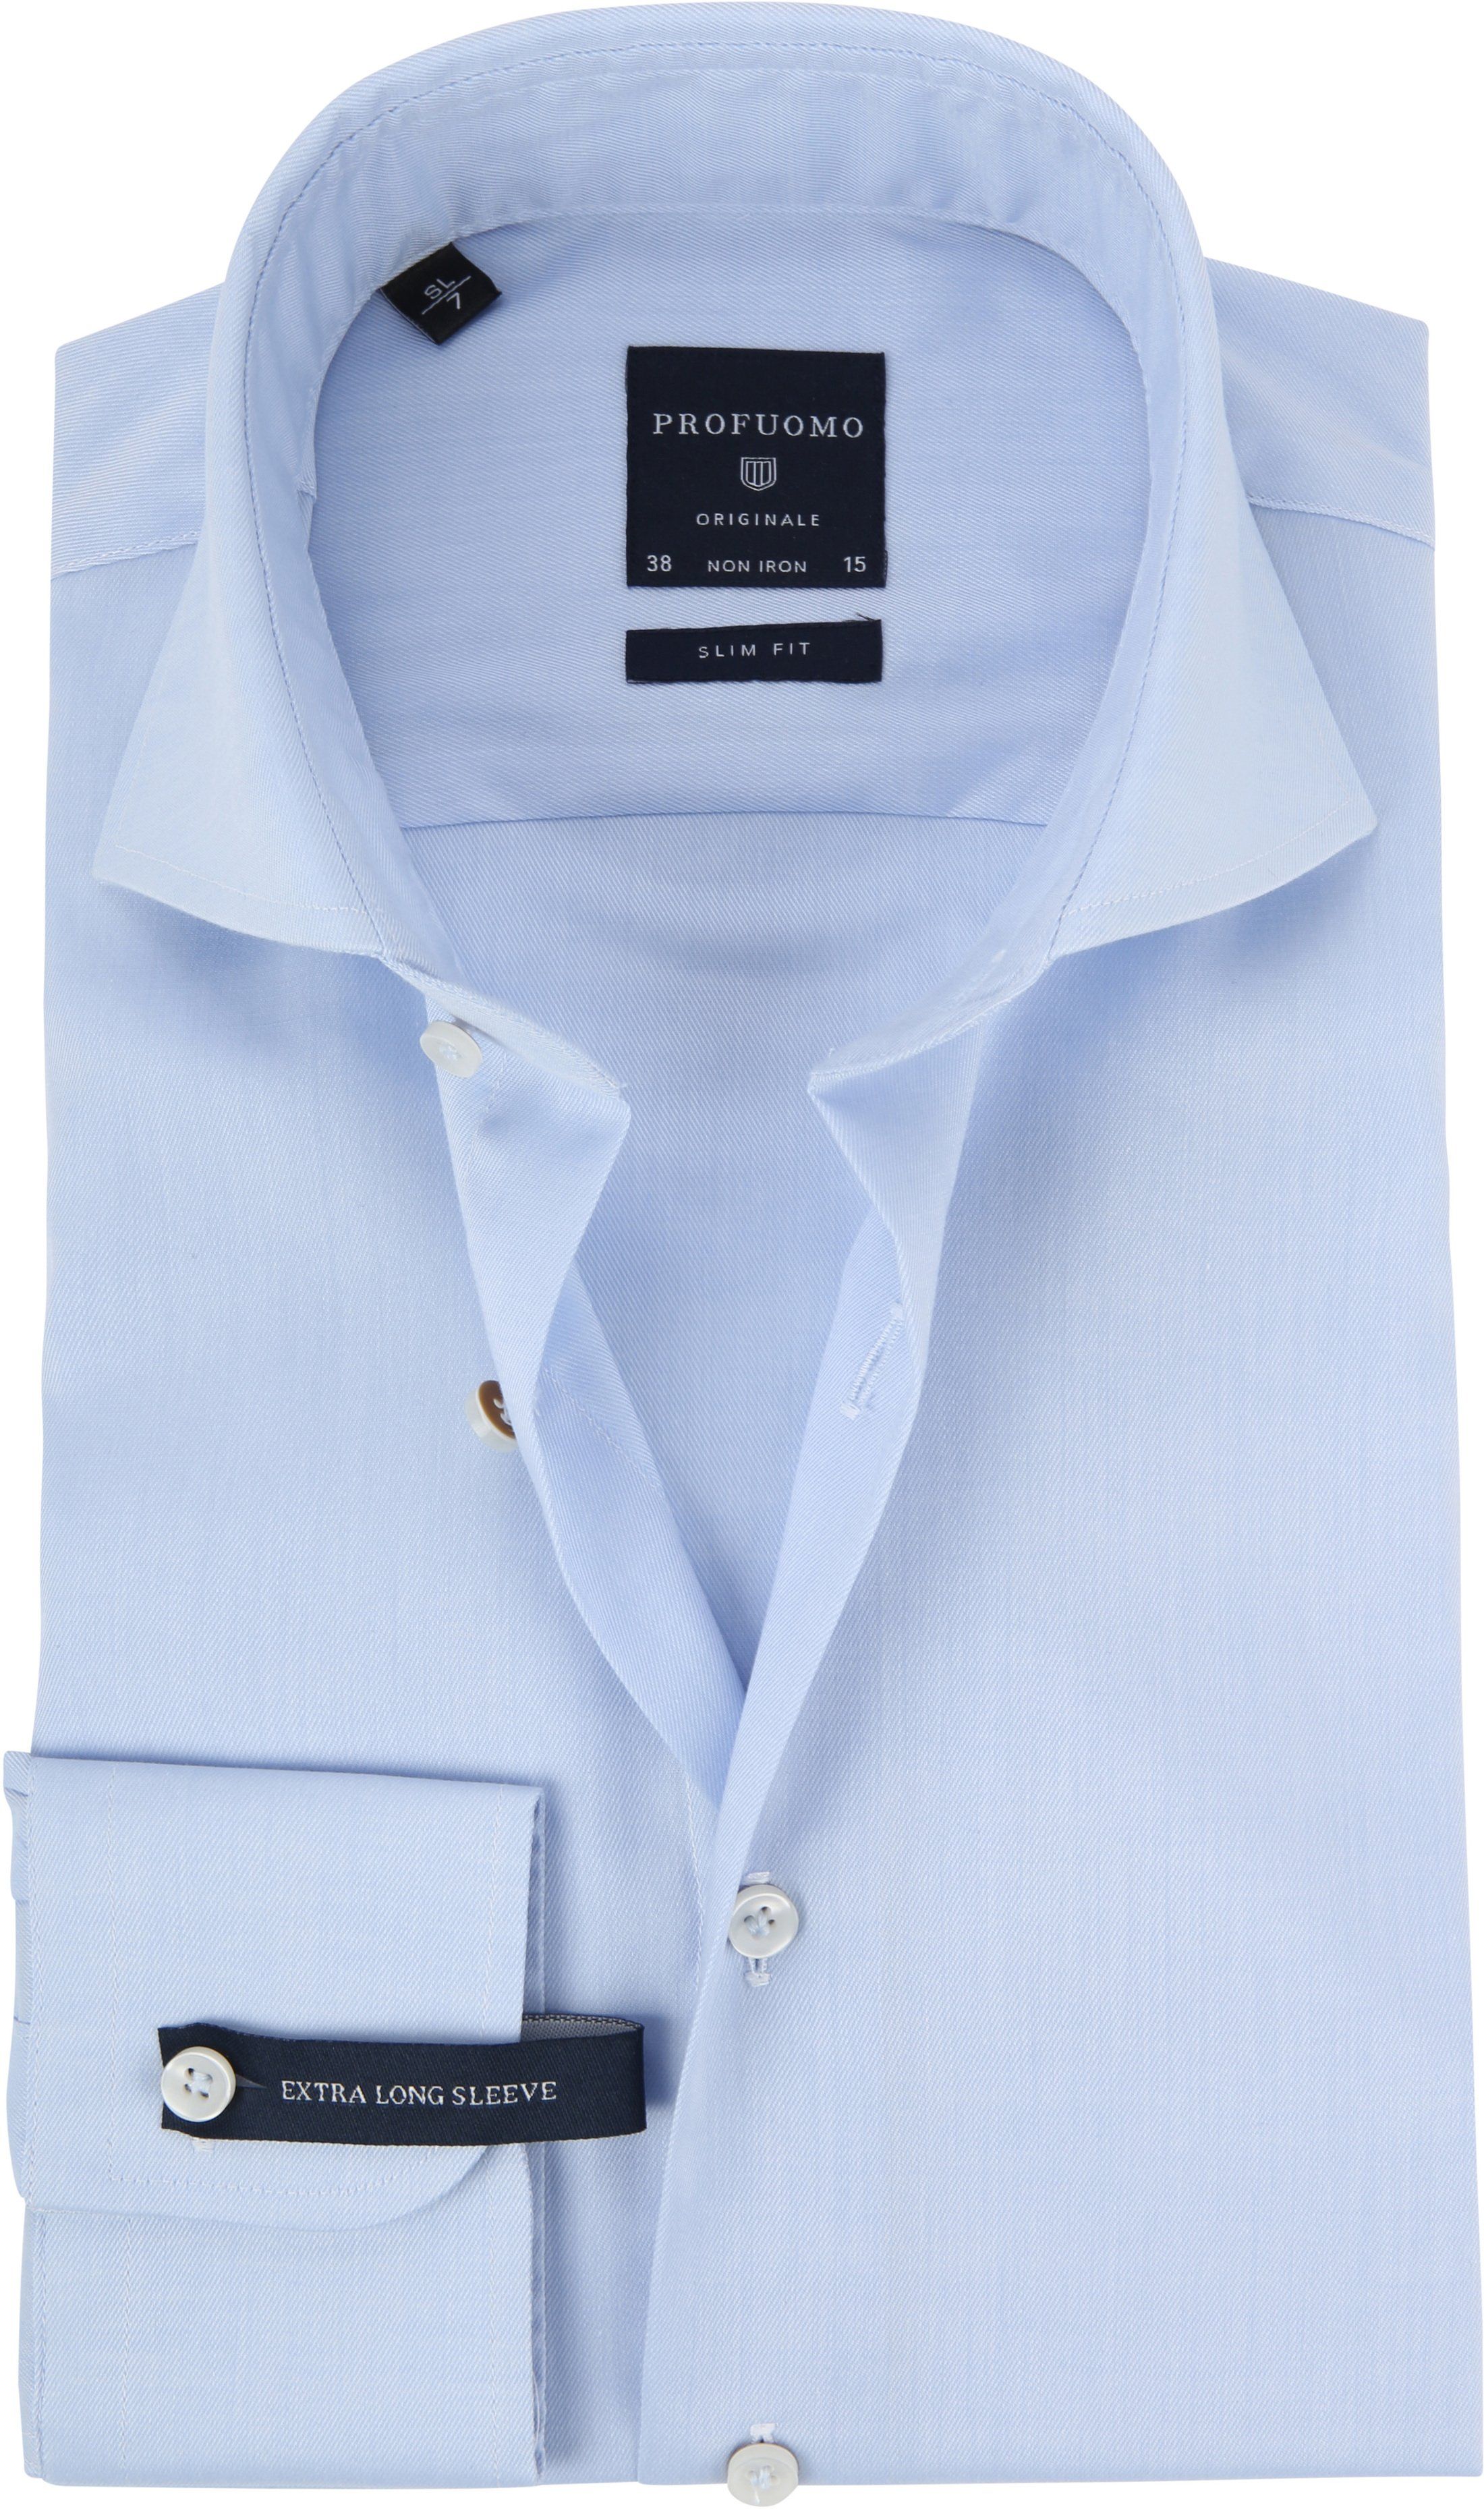 Profuomo Shirt Extra Long Sleeve Cutaway Light Blue size 14.5